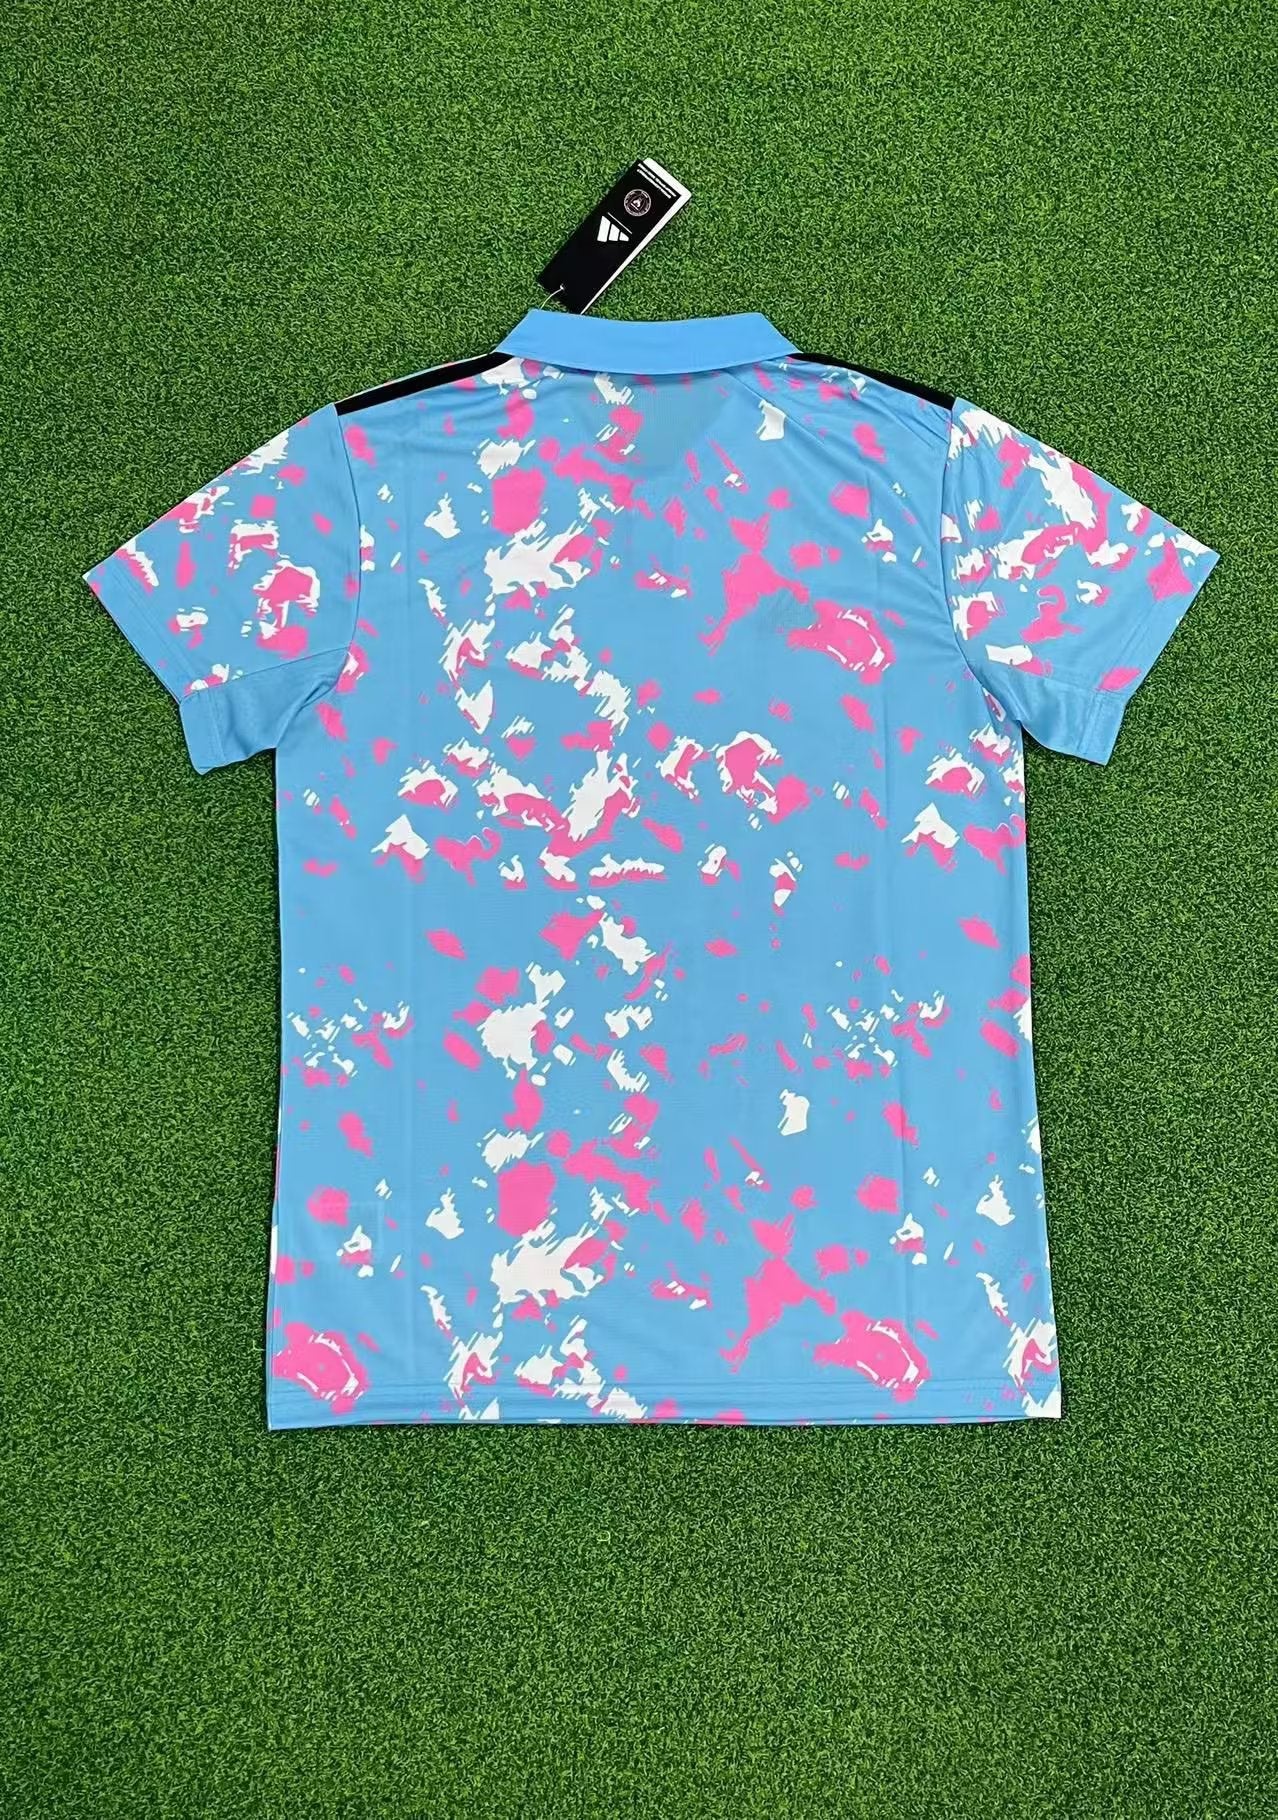 Inter Miami Special Edition Shirt